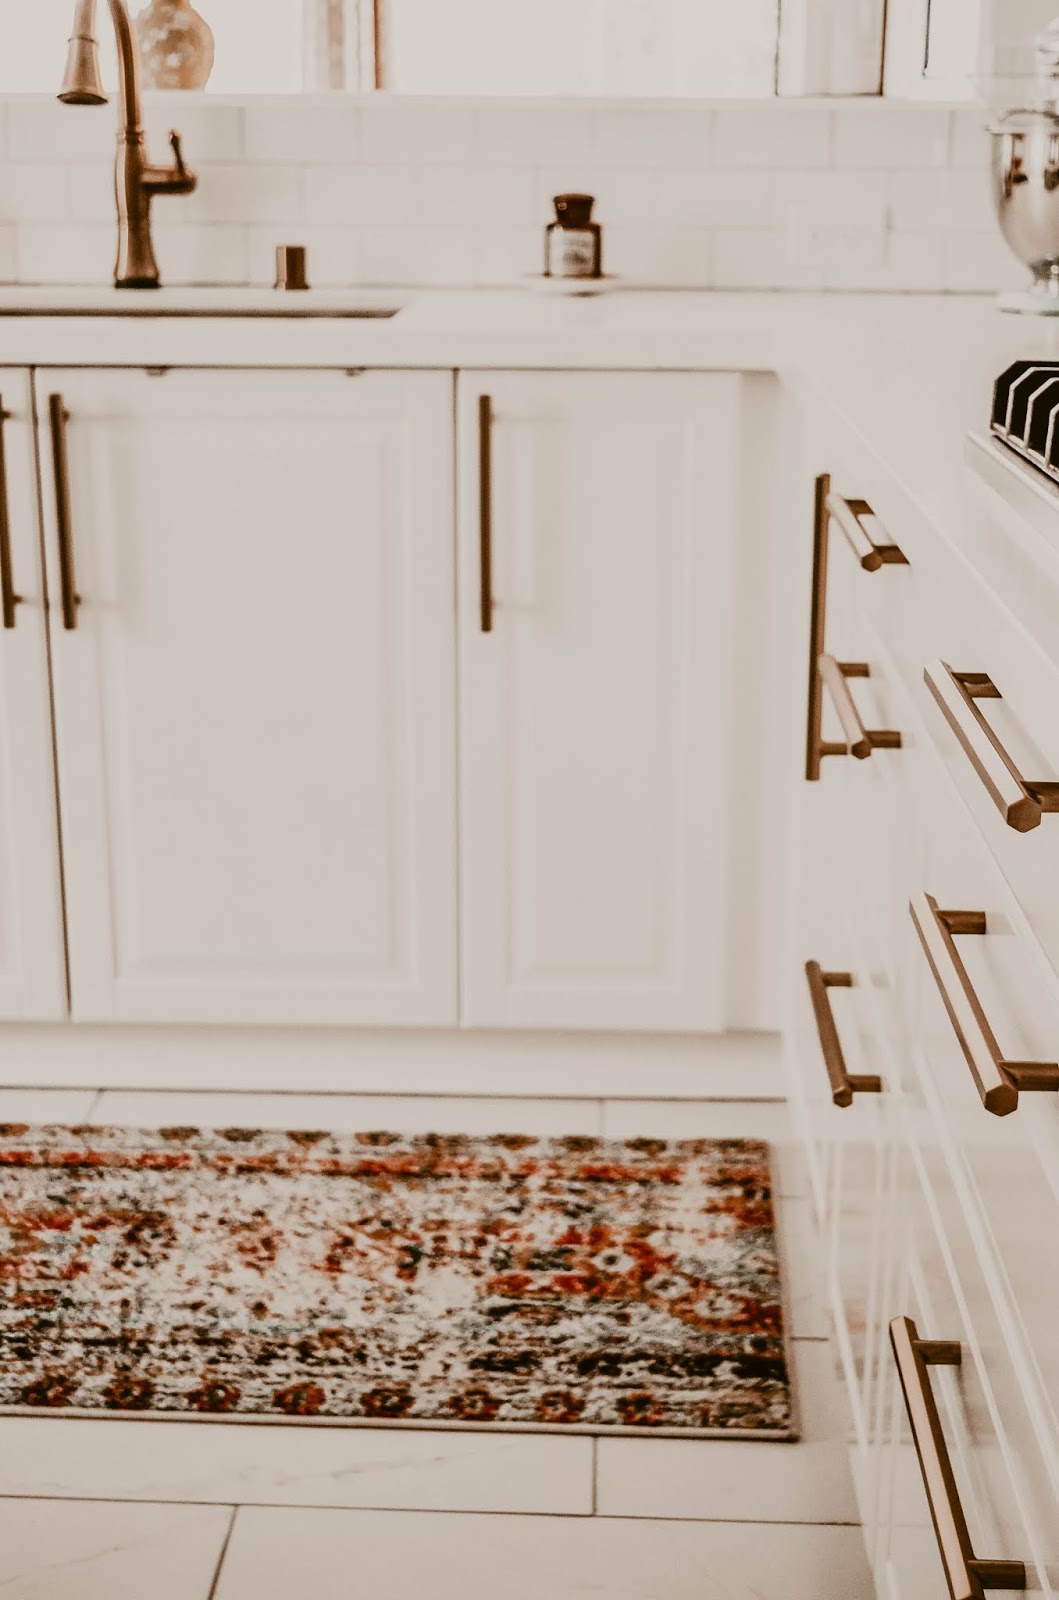 beckabellastyle-athome-modern-whiteandgrey-kitchen-renovation-remodel-beforeandafter-photos